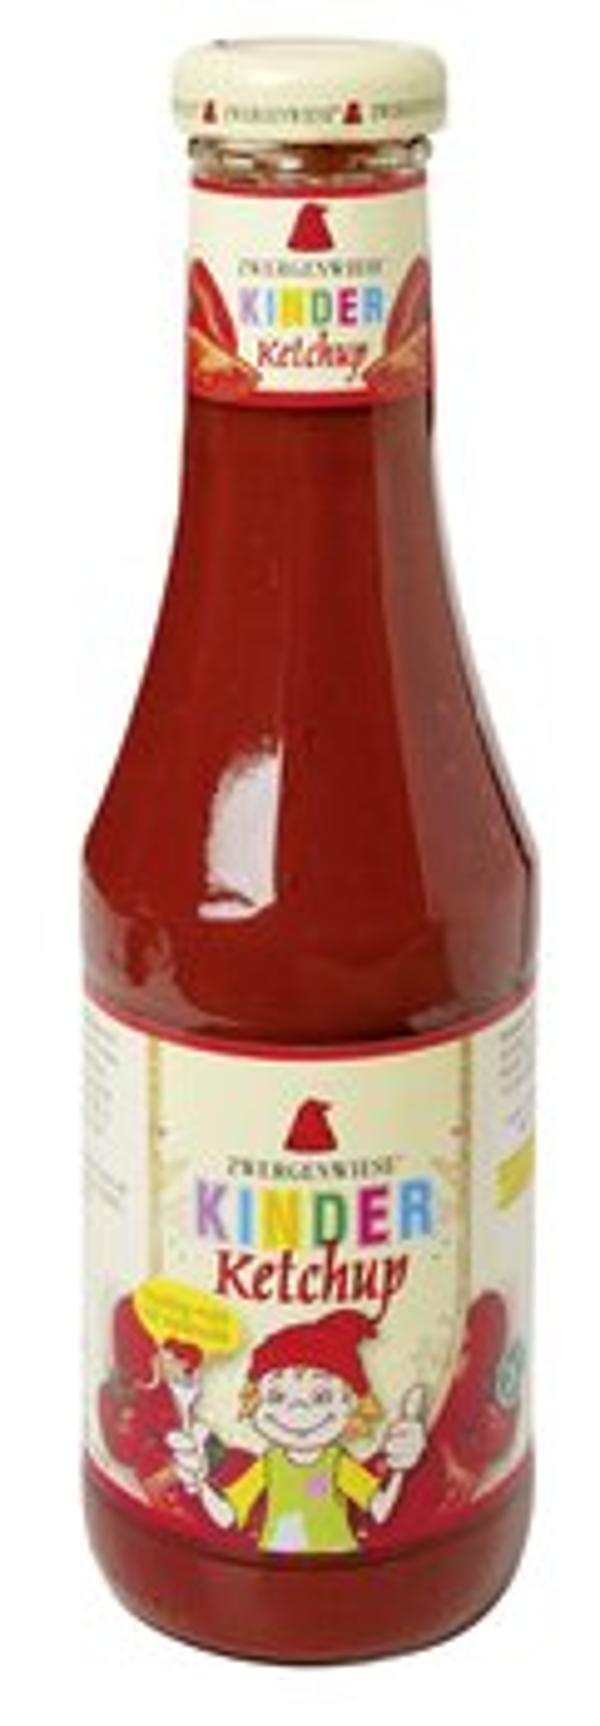 Produktfoto zu Kinder Ketchup